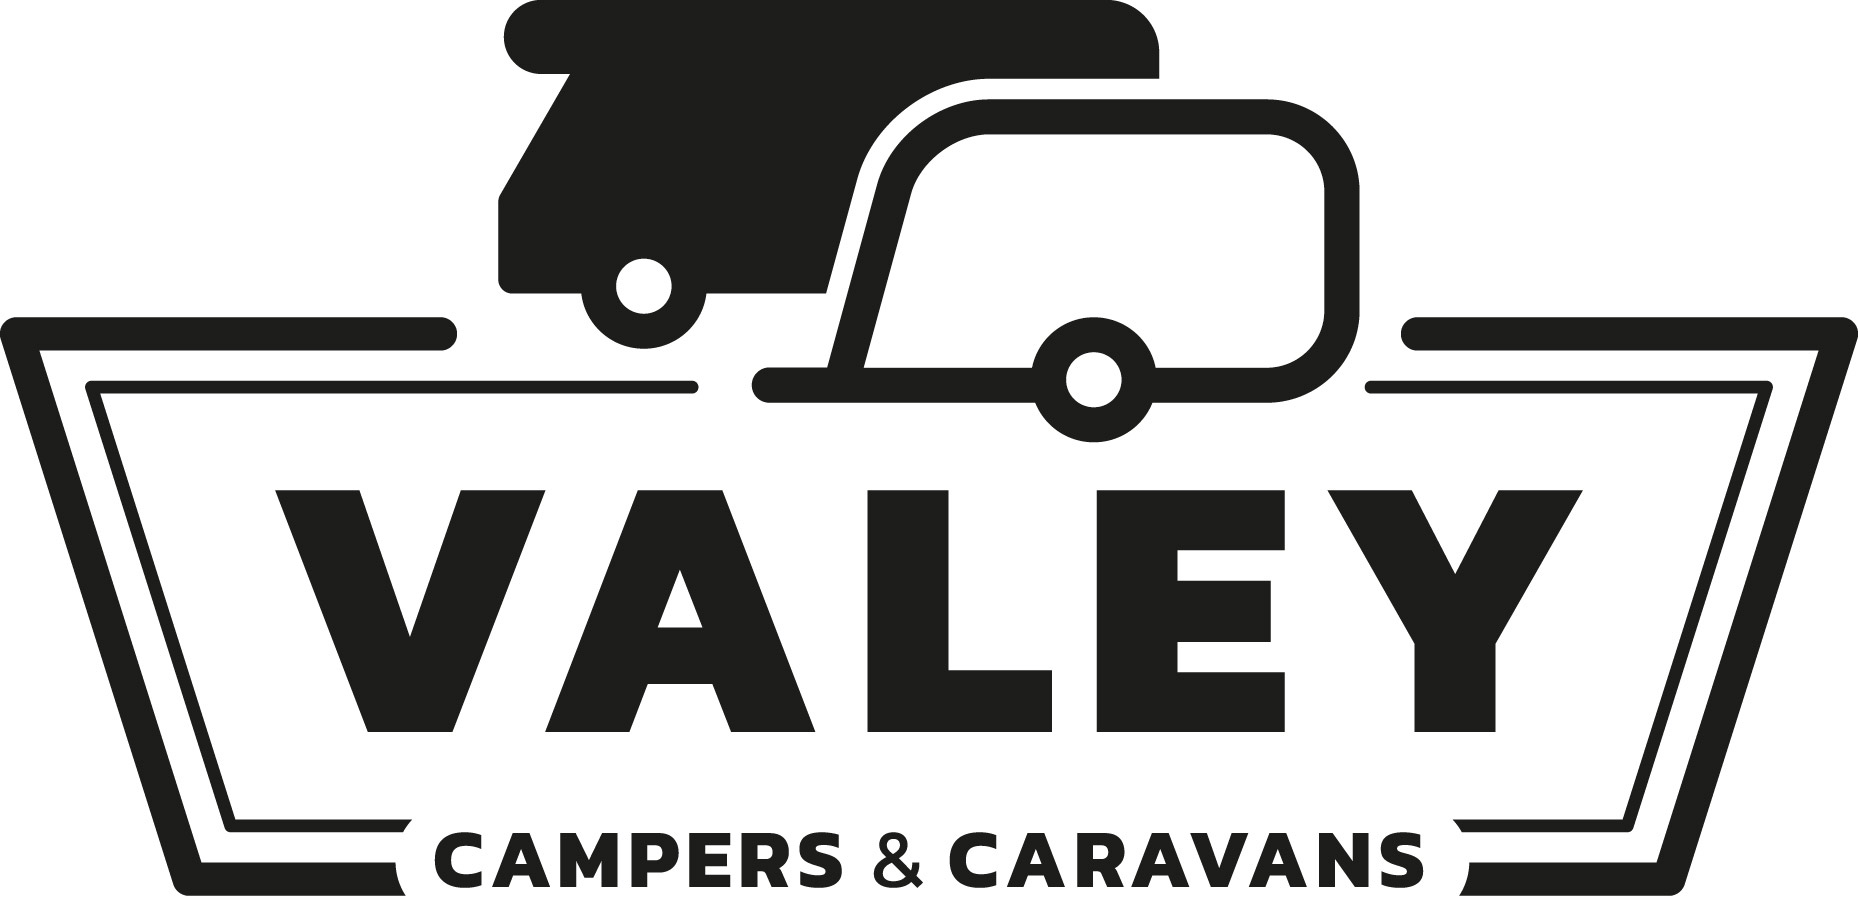 Ontwerp Valey logo